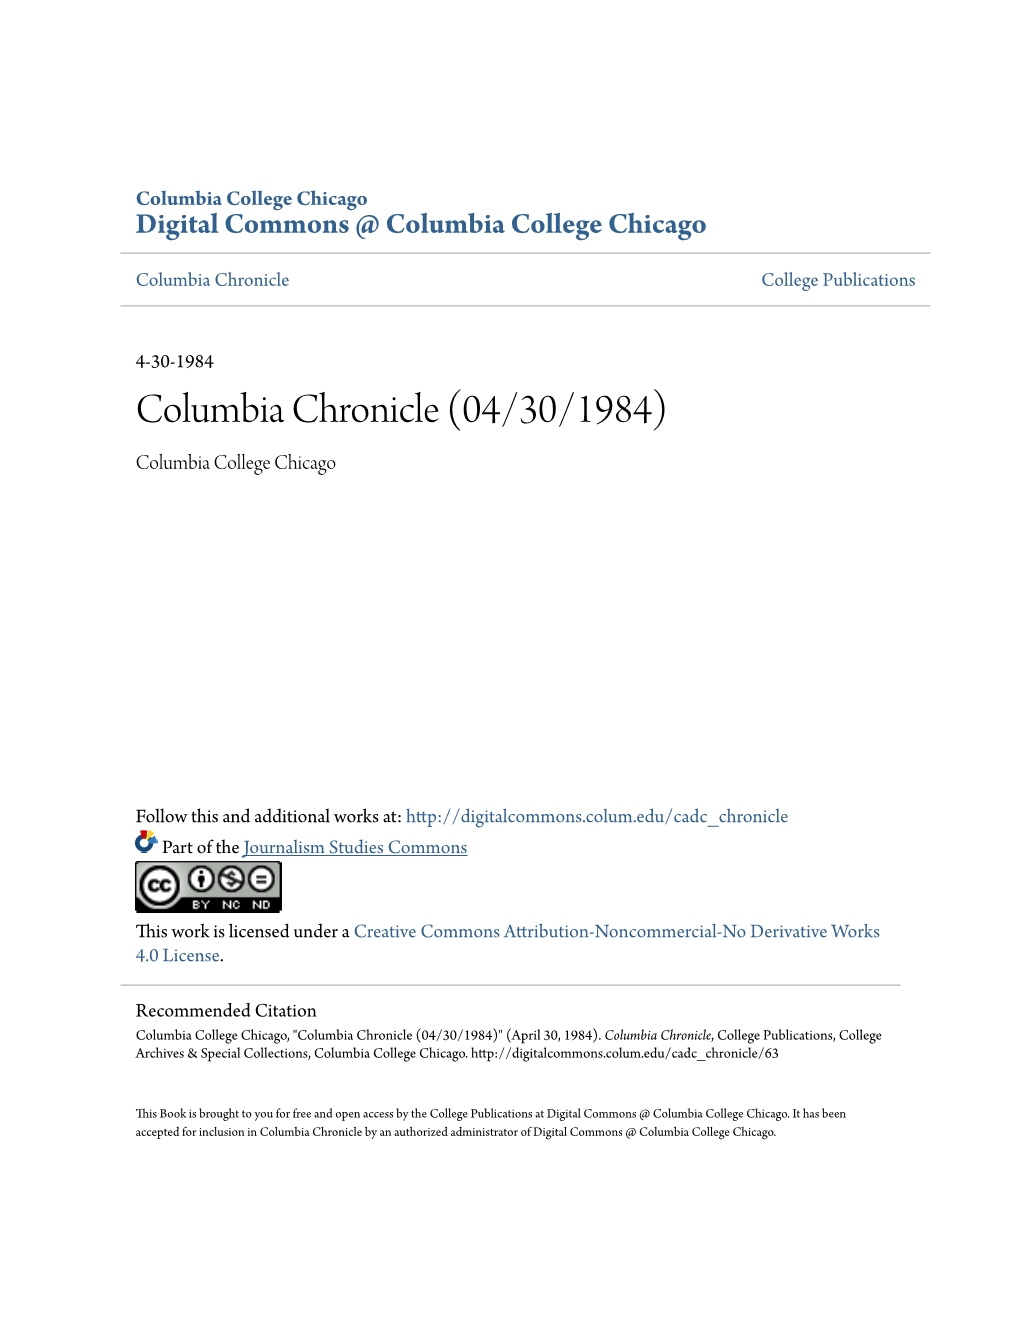 Columbia Chronicle (04/30/1984) Columbia College Chicago